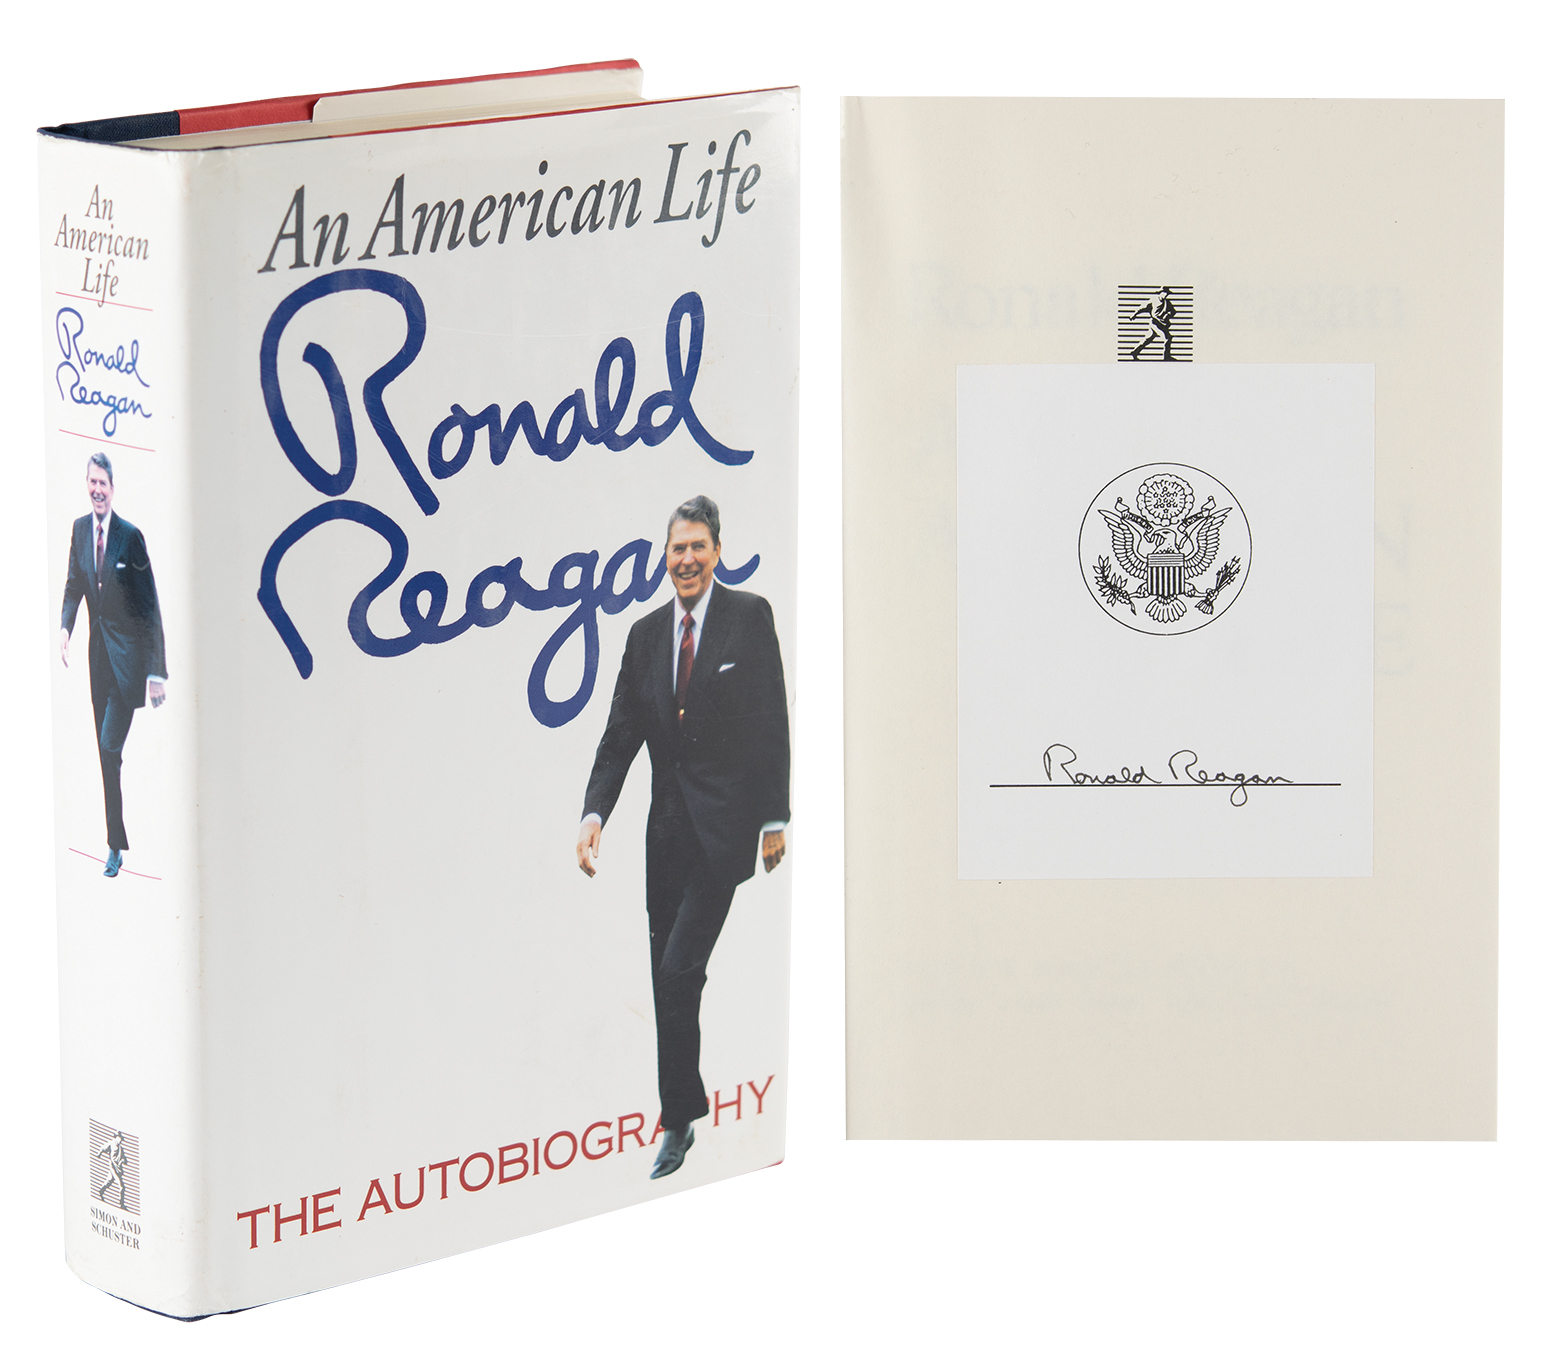 Lot #98 Ronald Reagan Signed Book - Image 1